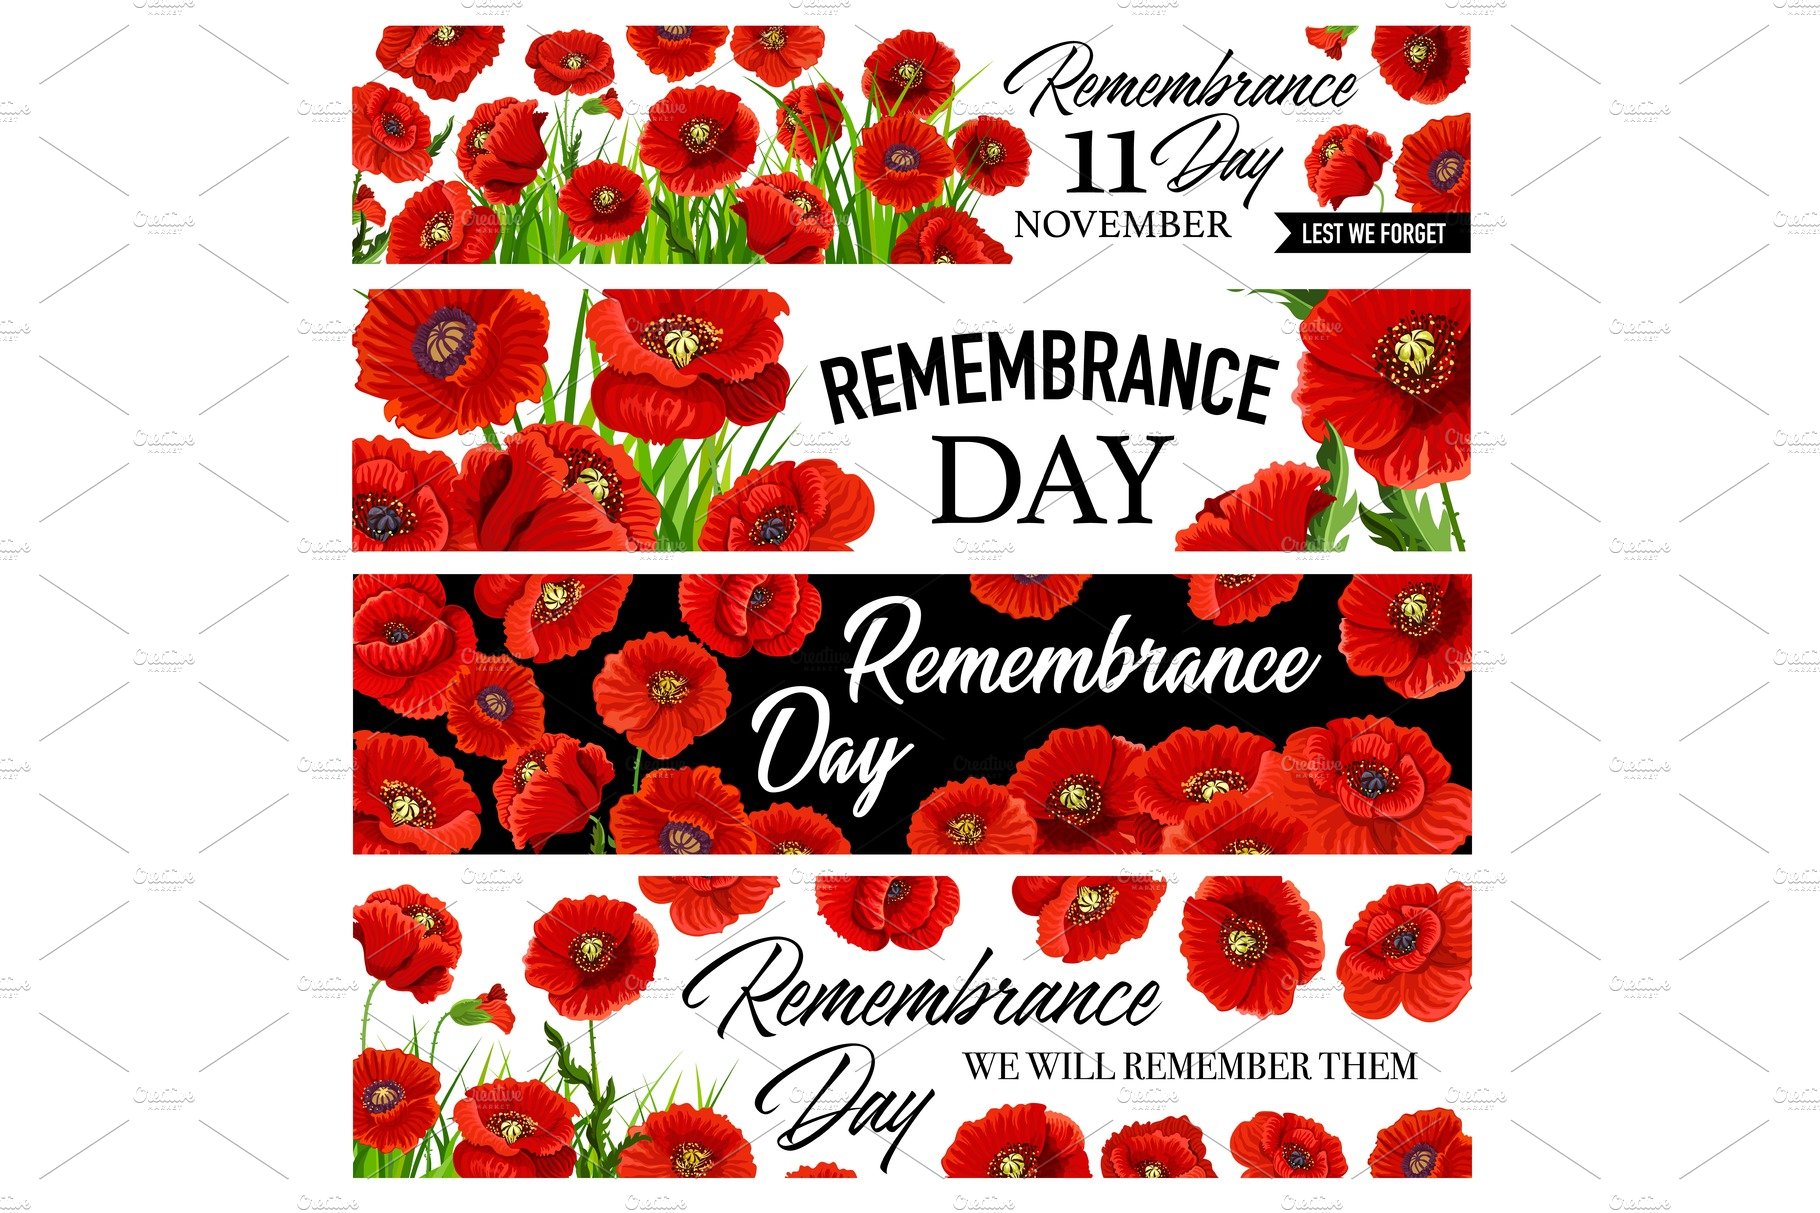 Remembrance Day - November 11